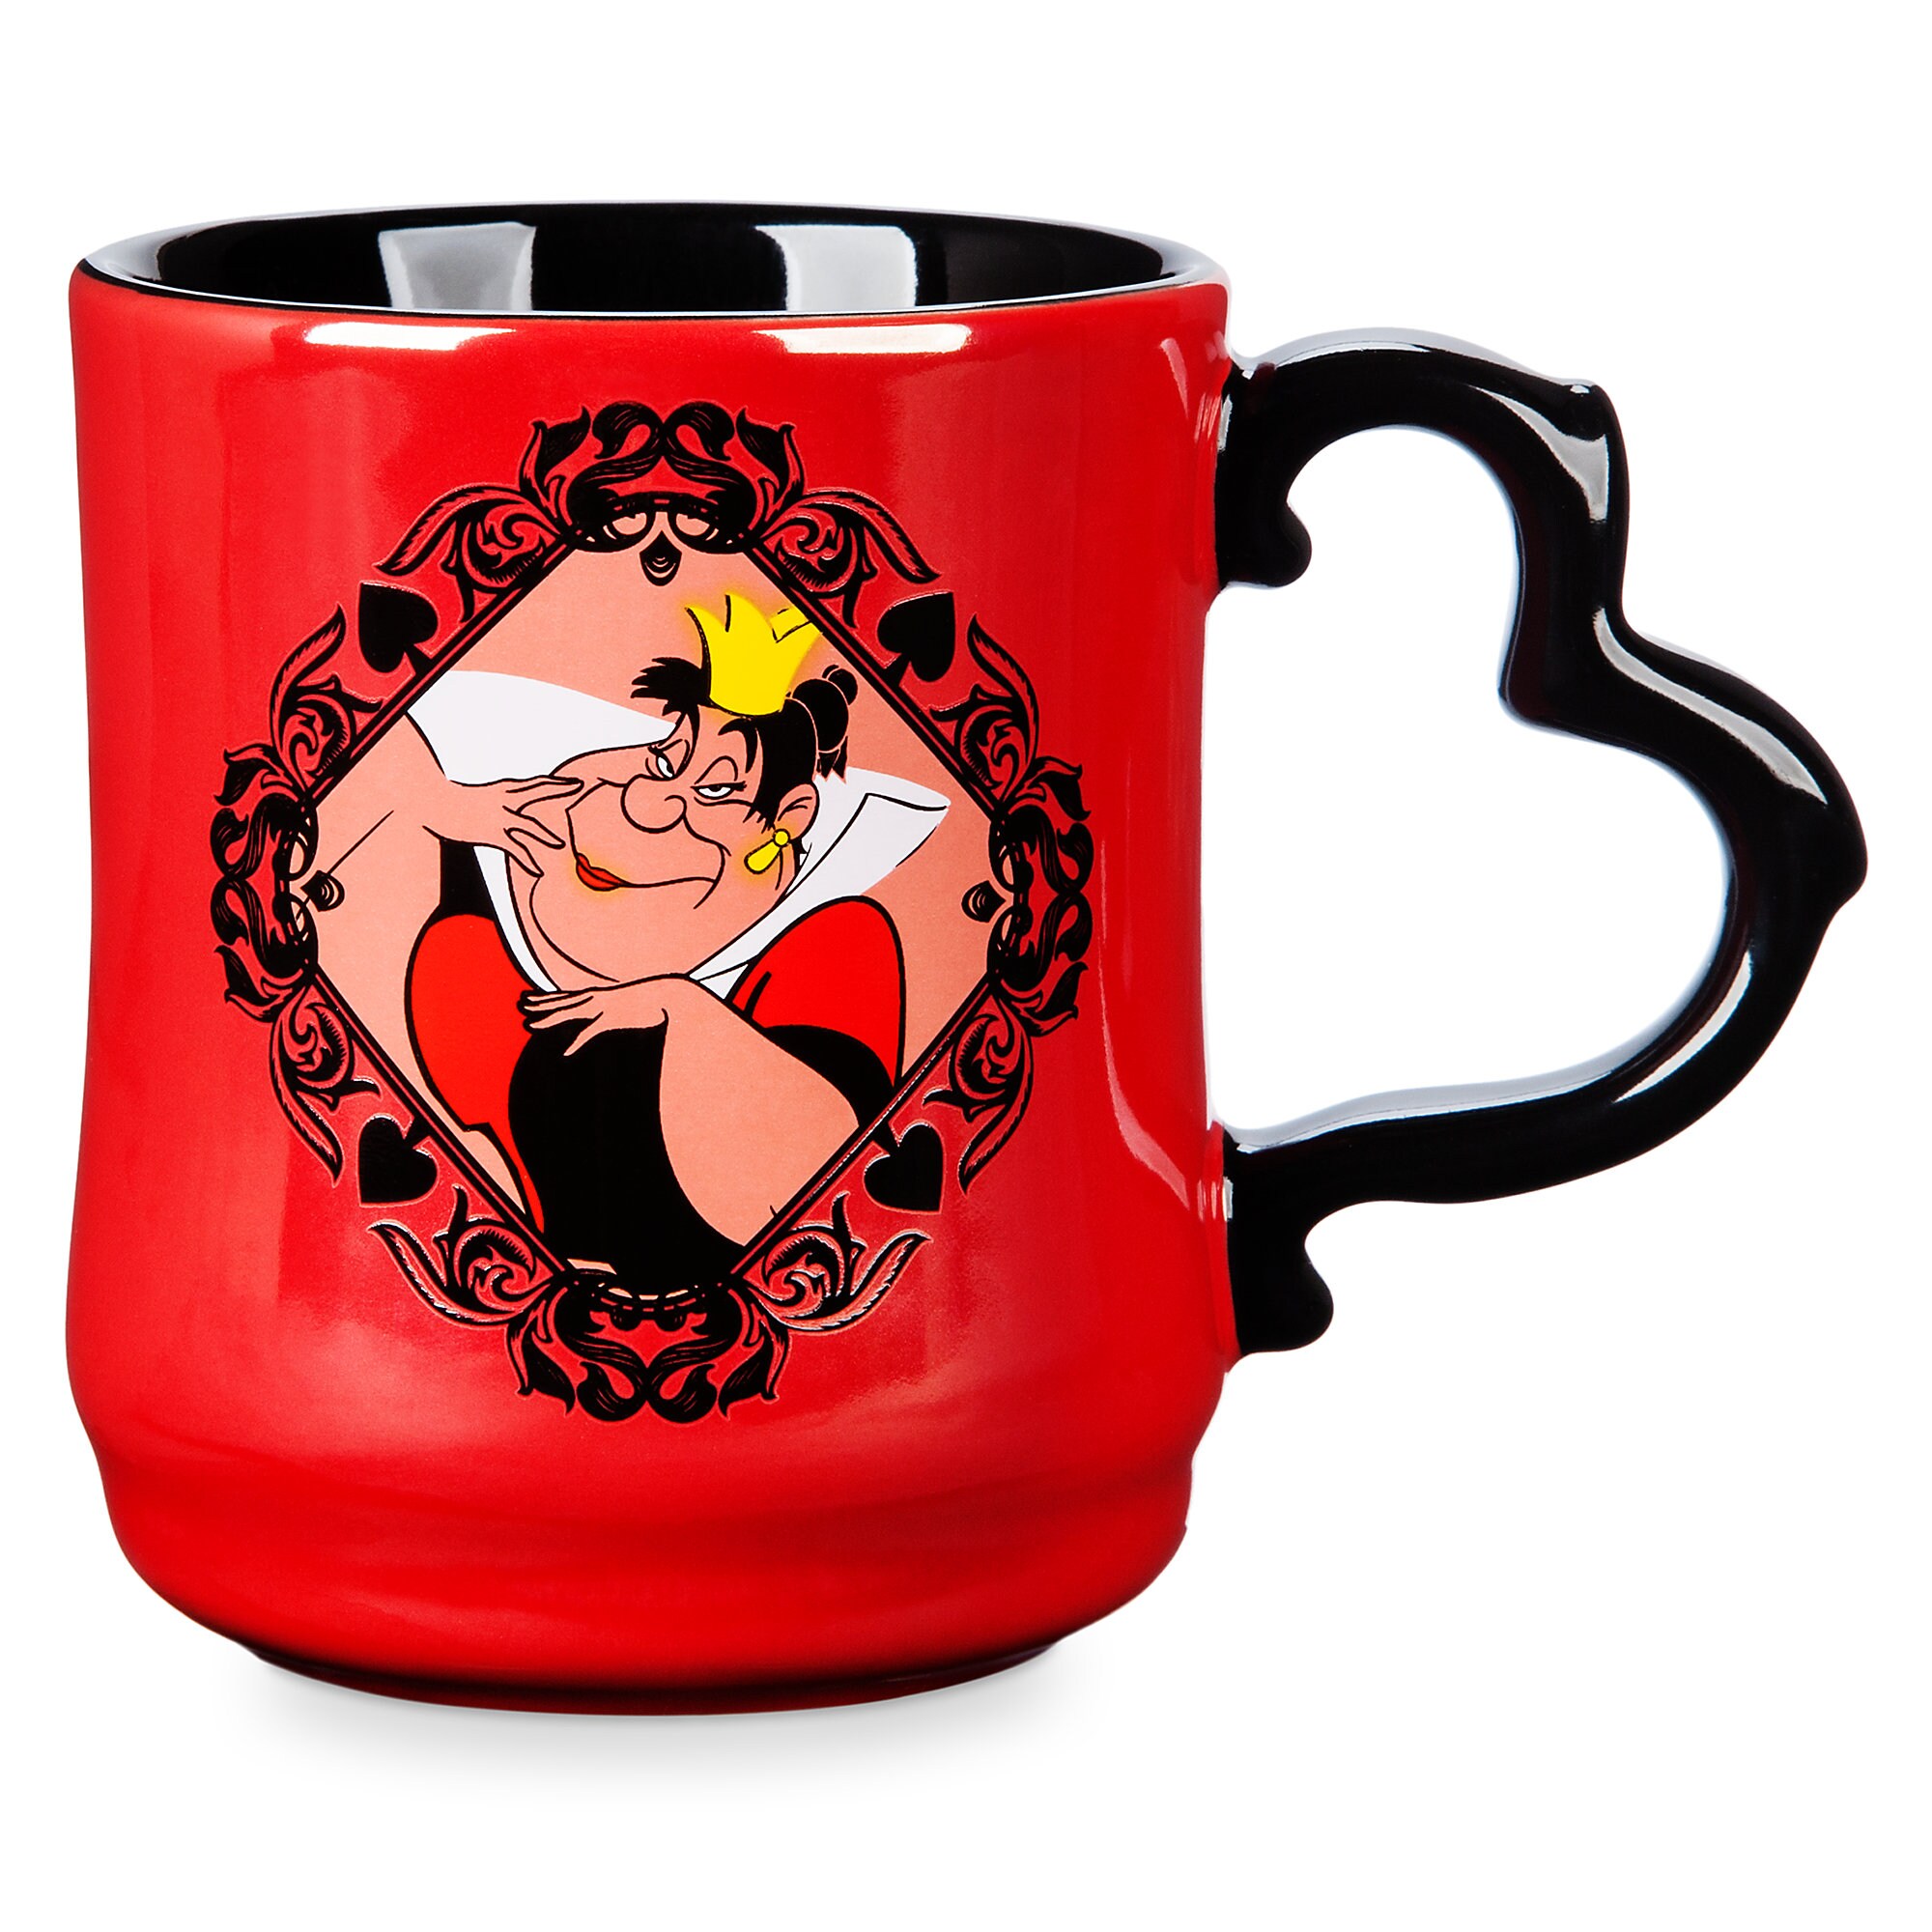 Queen of Hearts Mug - Alice in Wonderland - Disney Villains